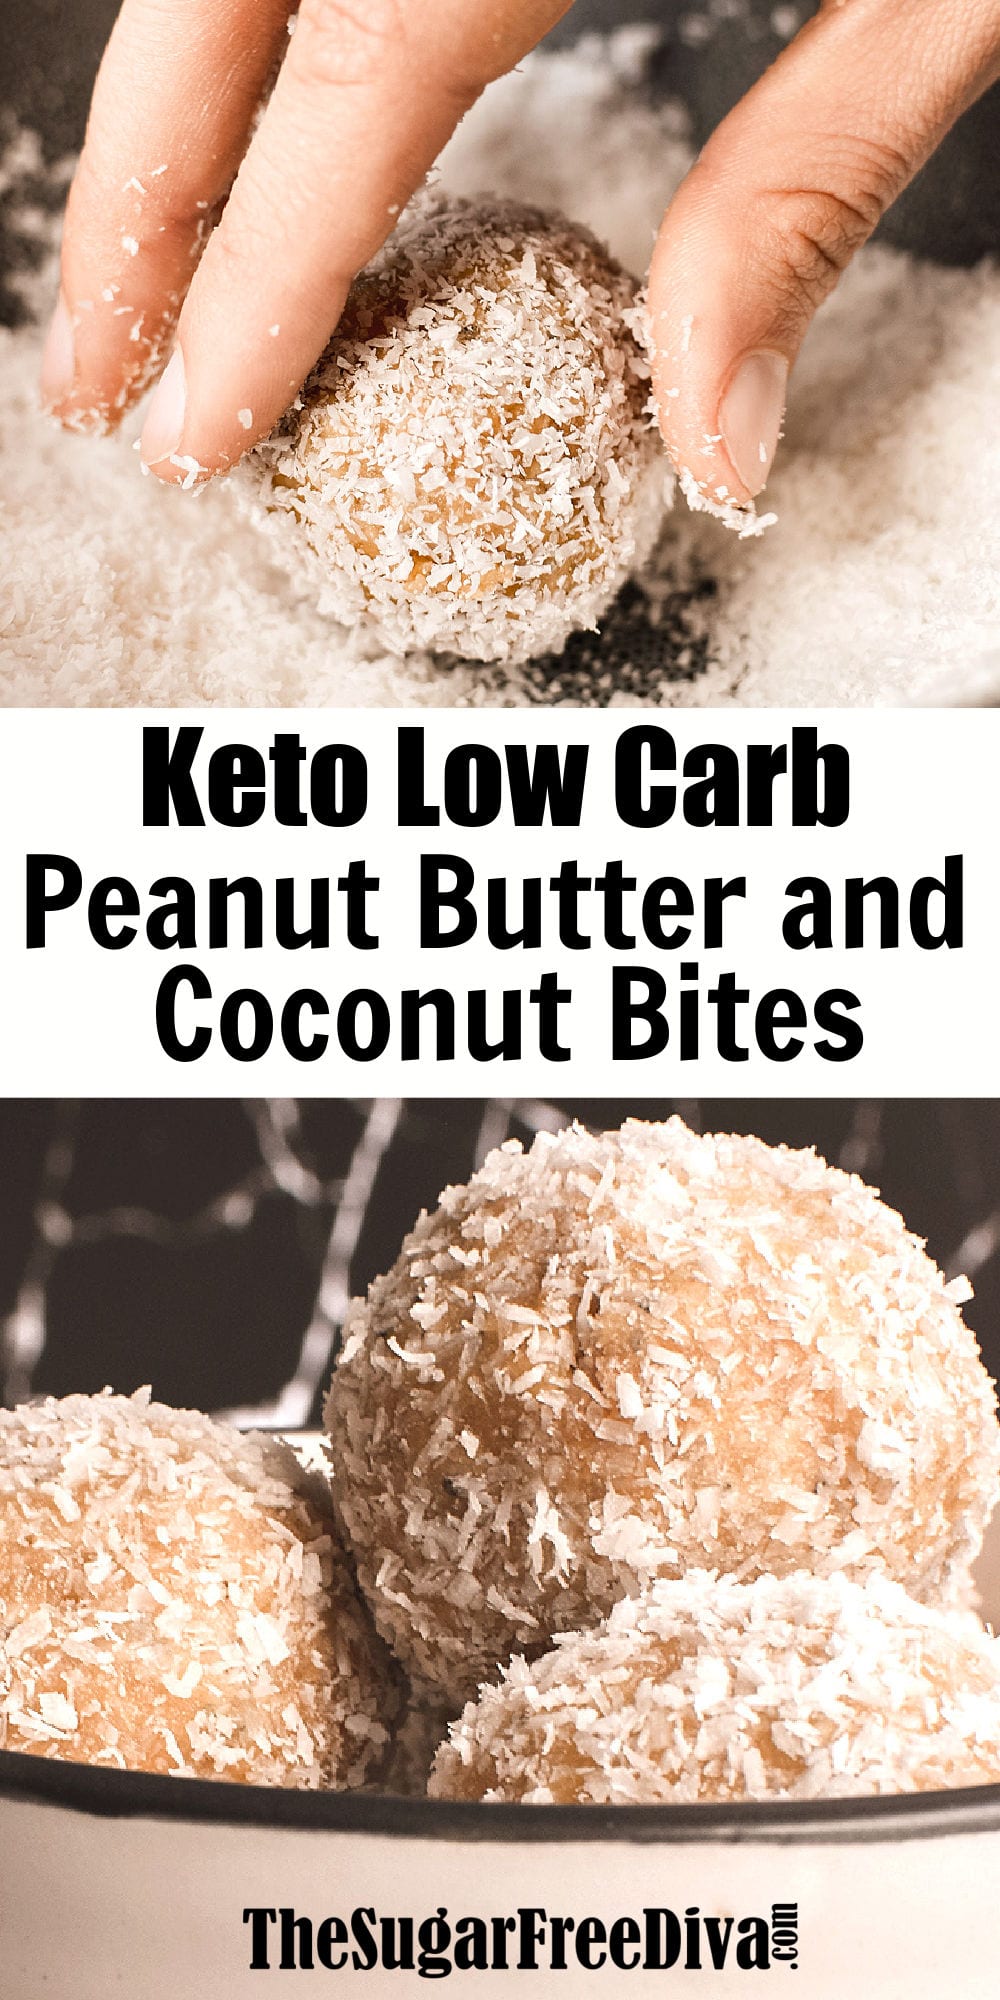 Keto Low Carb Peanut Butter Coconut Bites